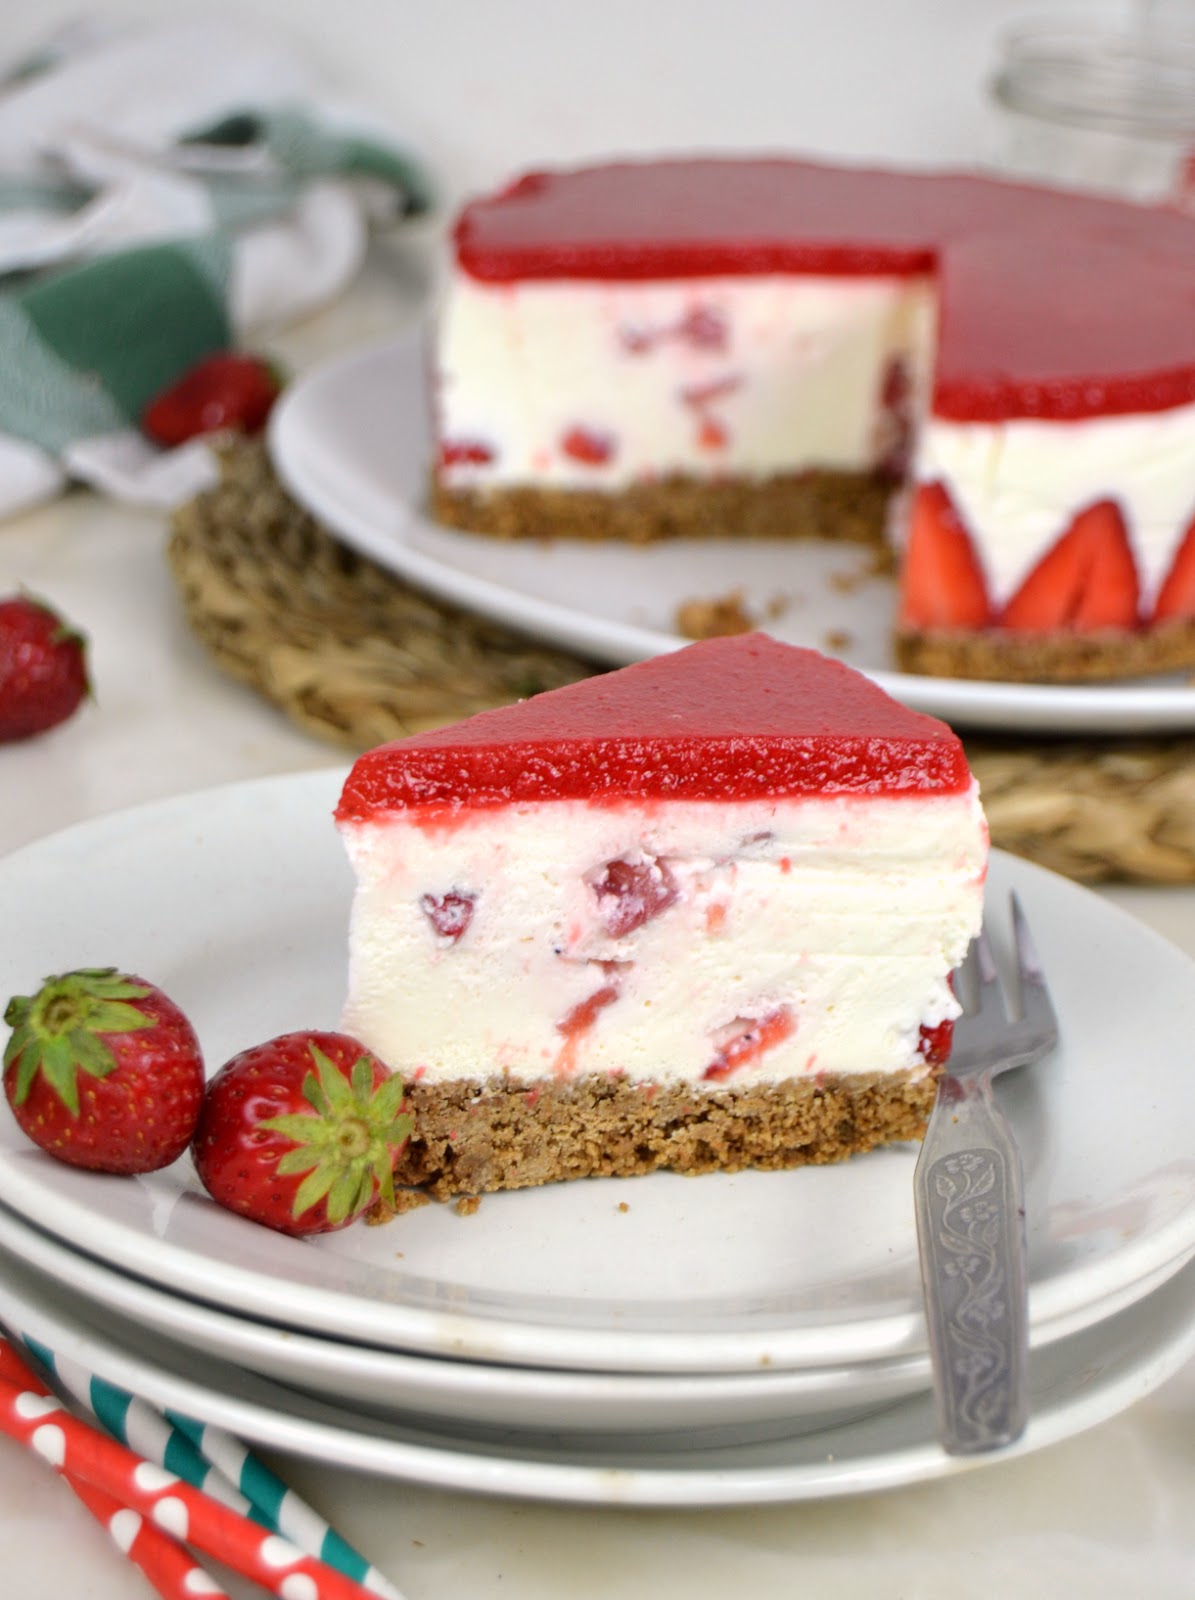 Tarta de queso y fresas estilo fraisier